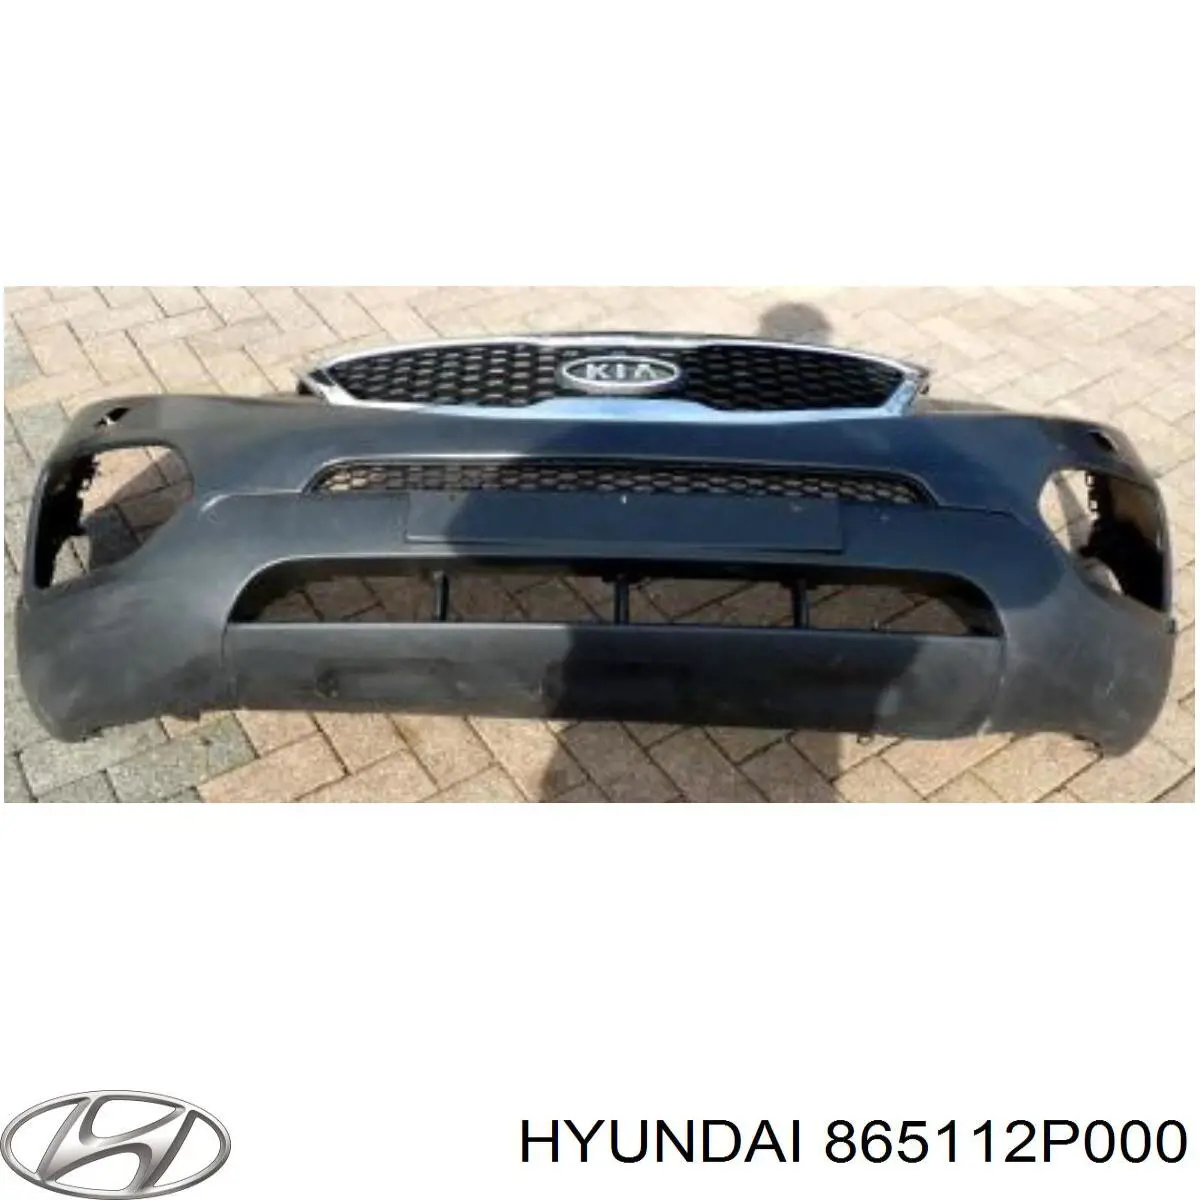 865112P000 Hyundai/Kia parachoques delantero, parte superior